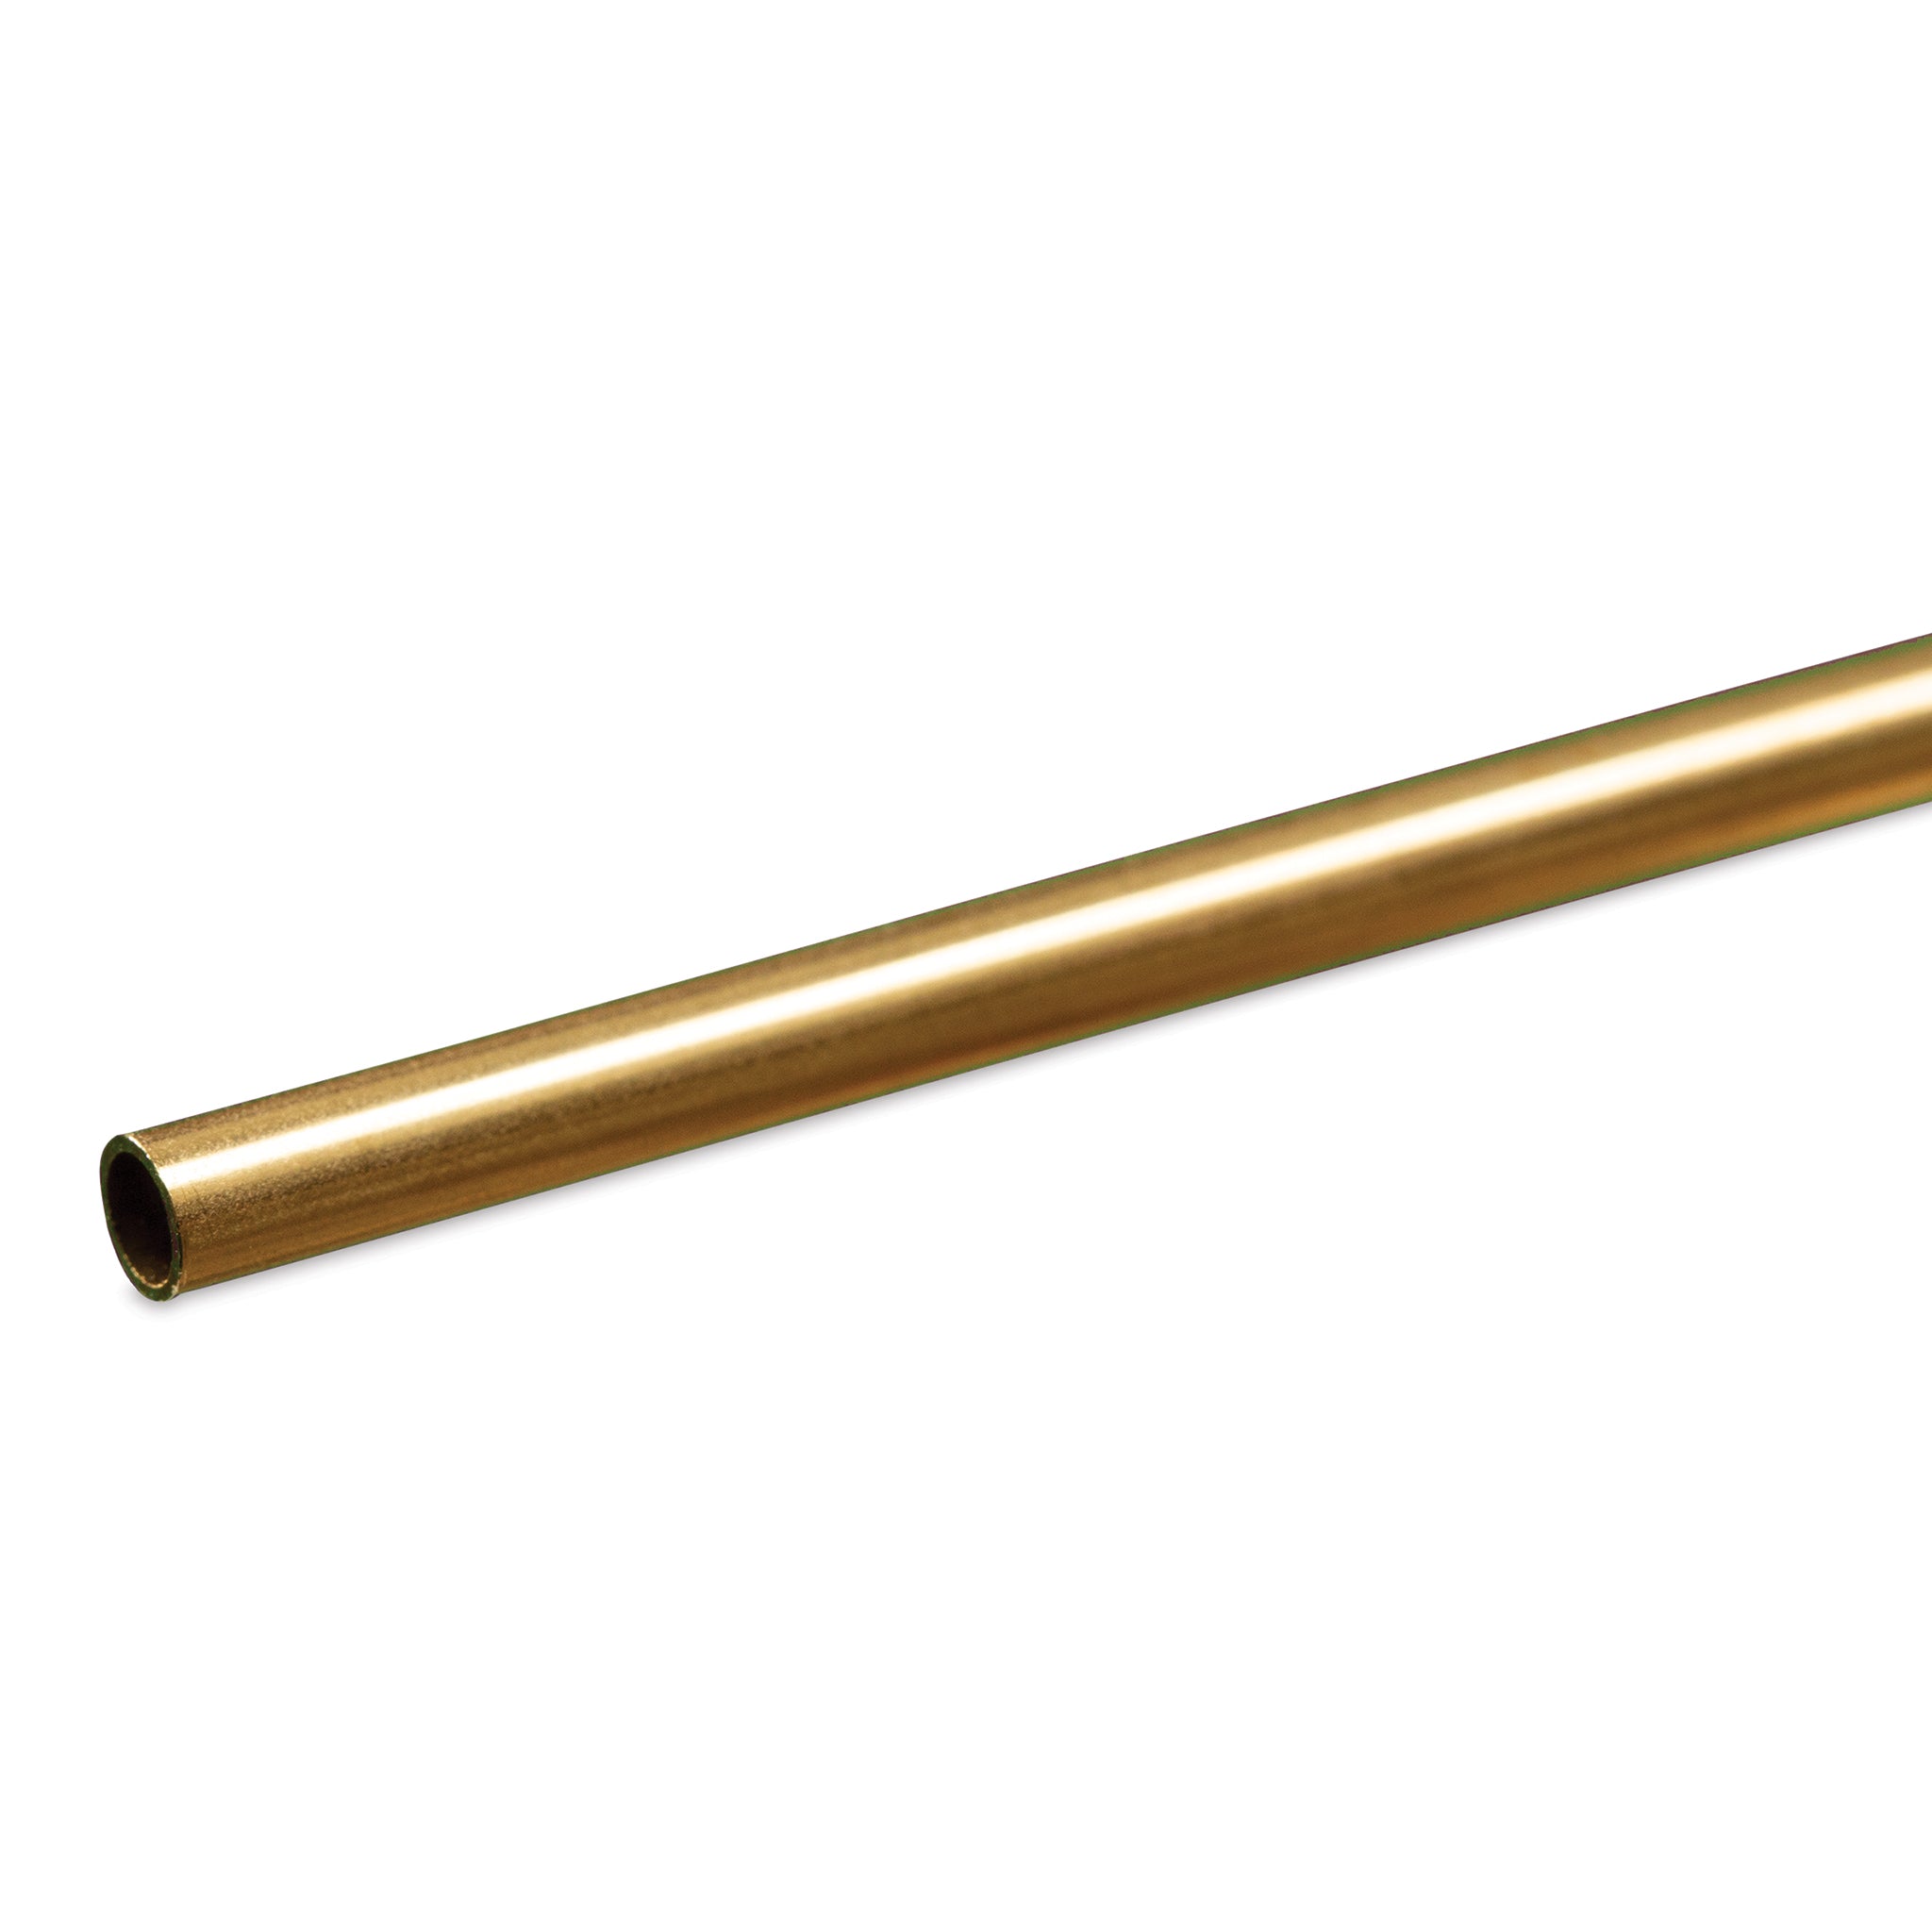 K&S Metals 8128 Round Brass Tube 5/32" OD x 0.014" Wall x 12" Long (1 Piece)